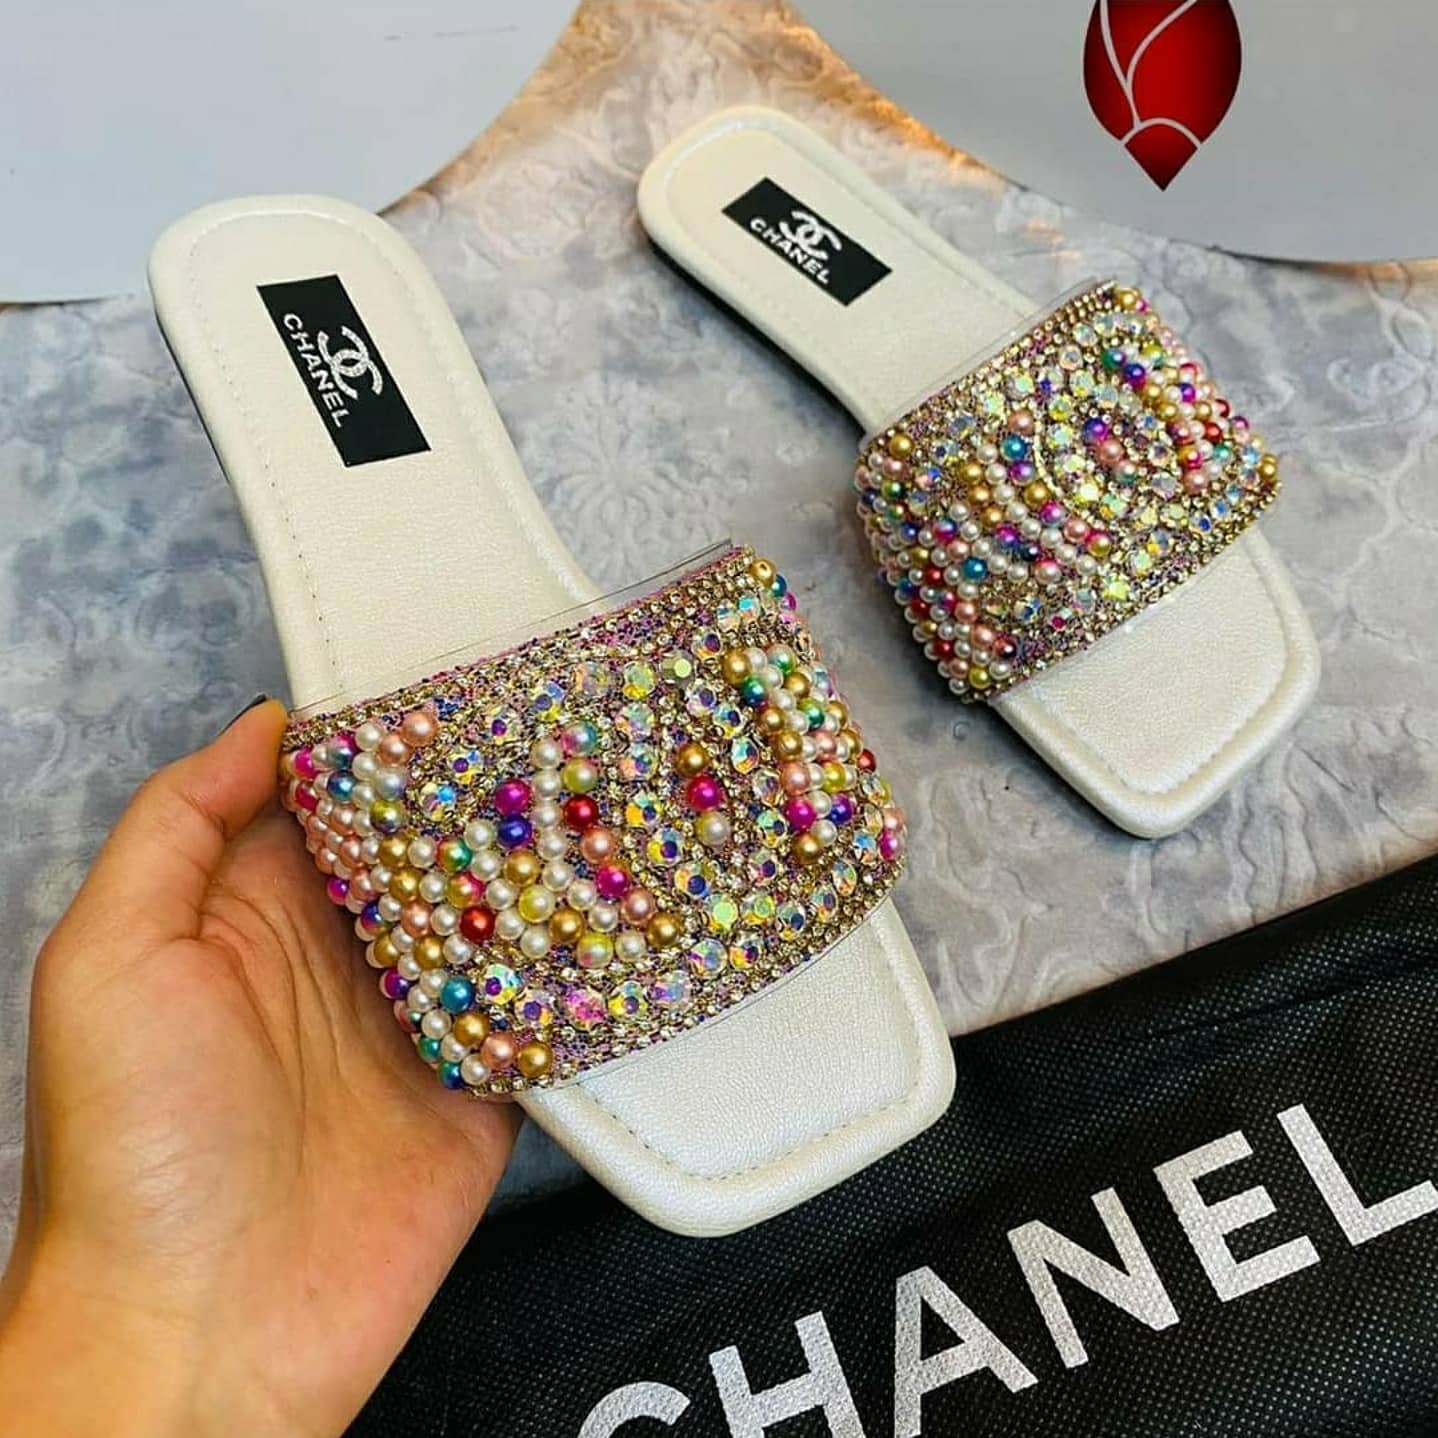 Chanel ladies sandals